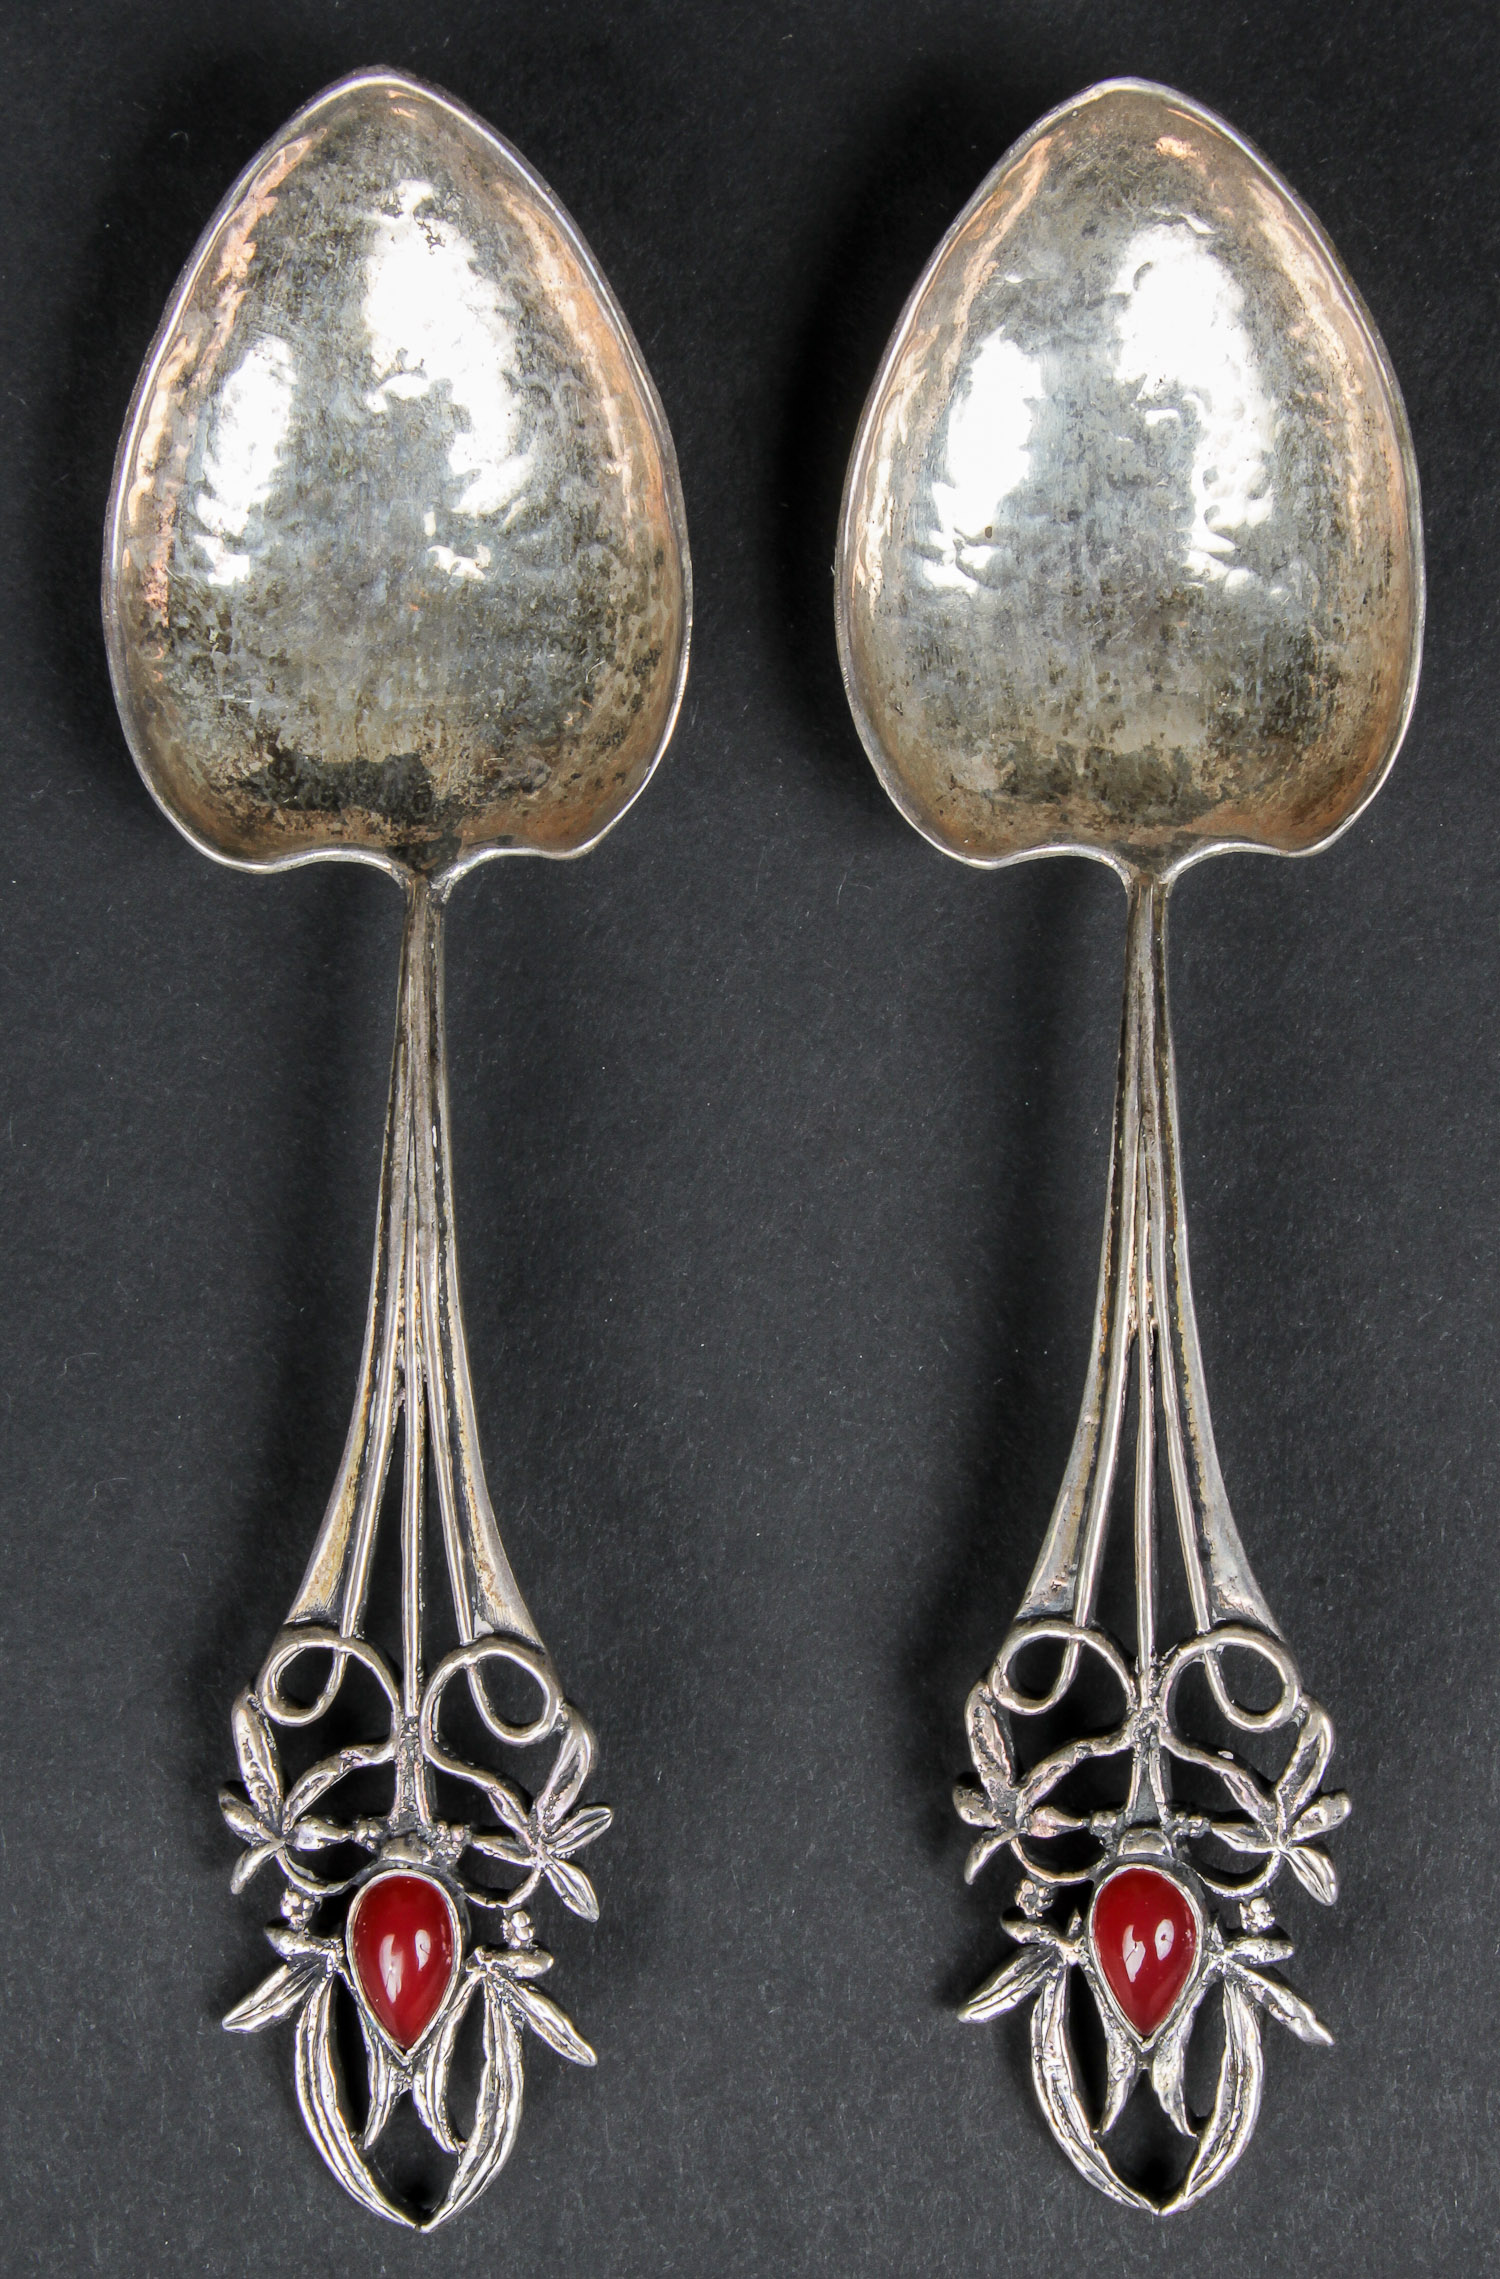 Boxed Set of Edwardian Berry Spoons. By Sybil Dunlap. Size: 6", 15 cm (each). Provenance: Kristina